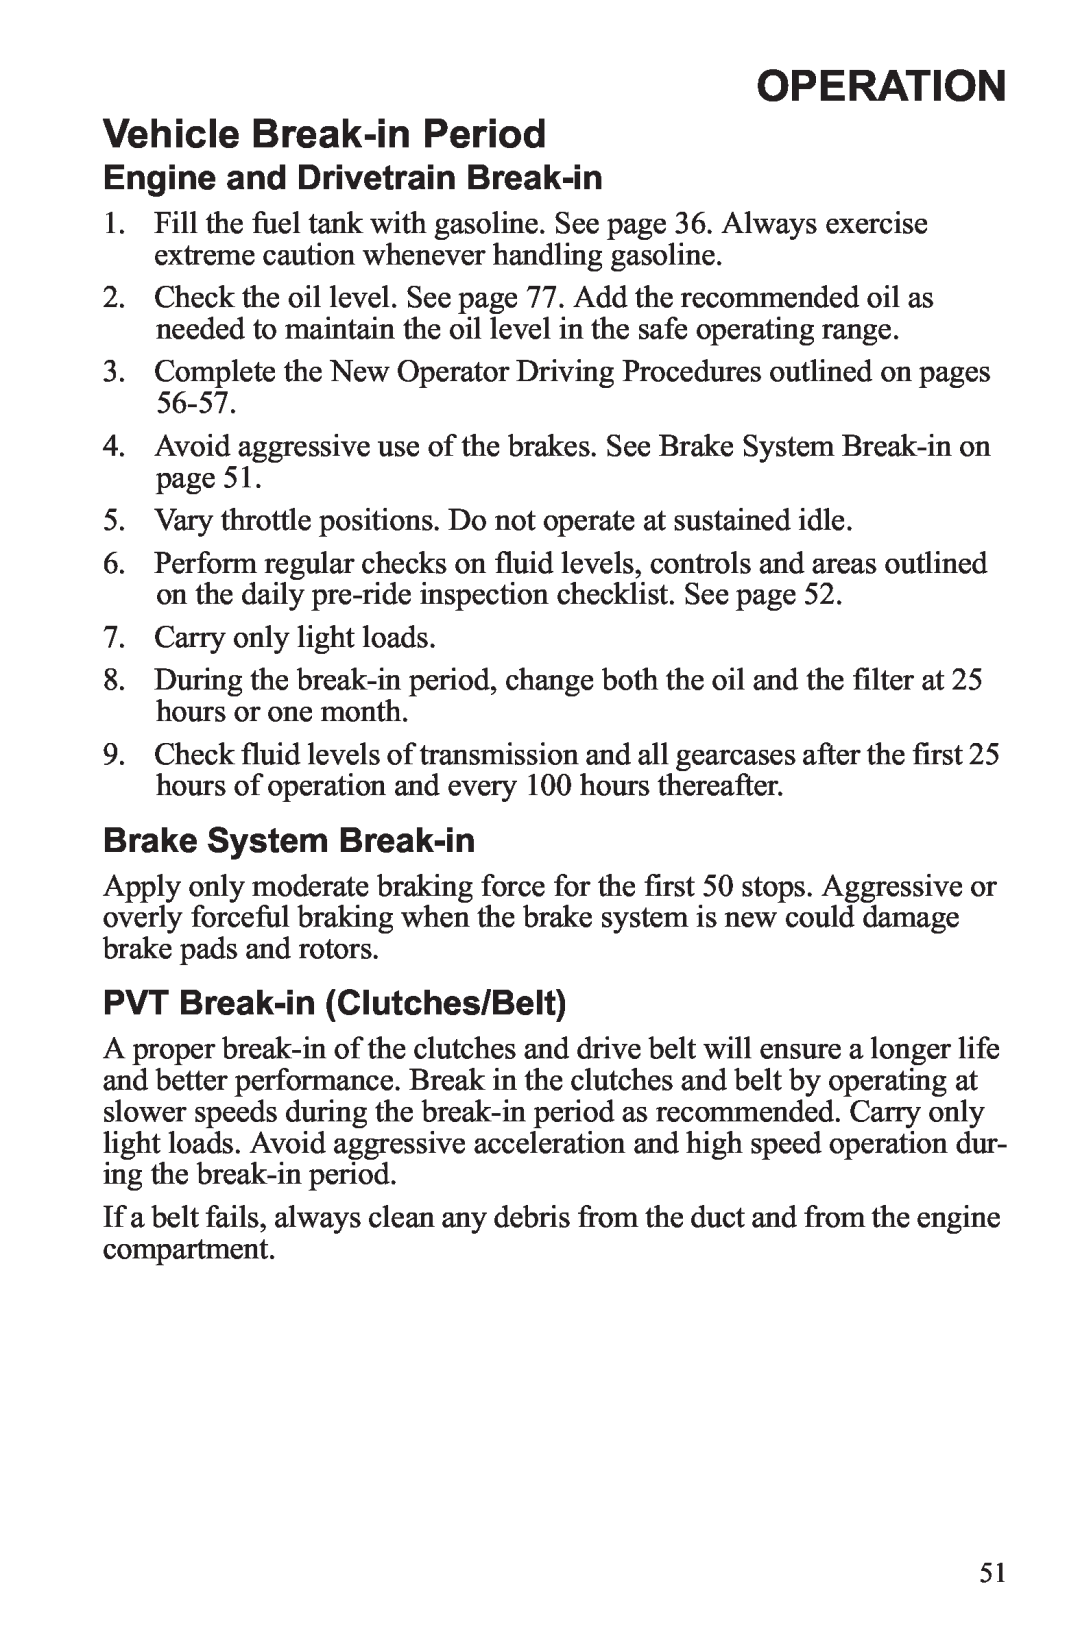 Polaris RZR XP 900 owner manual Operation, Engine and Drivetrain Break-in, Brake System Break-in, PVT Break-inClutches/Belt 